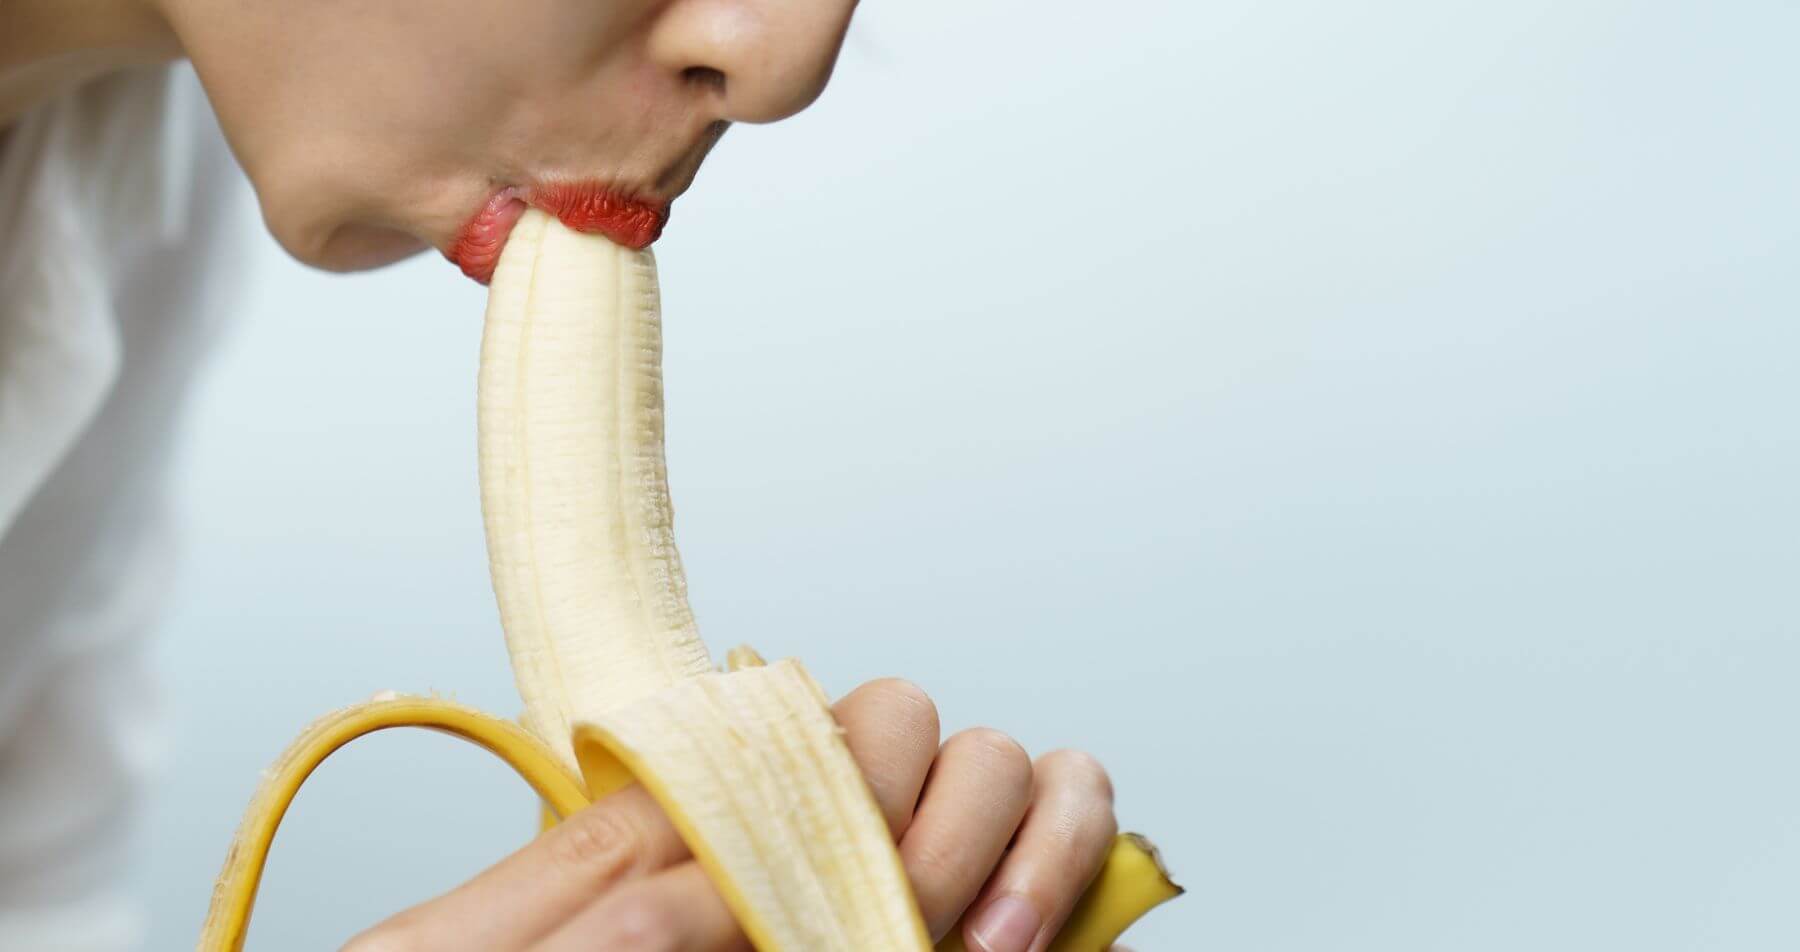 Woman fellating a banana